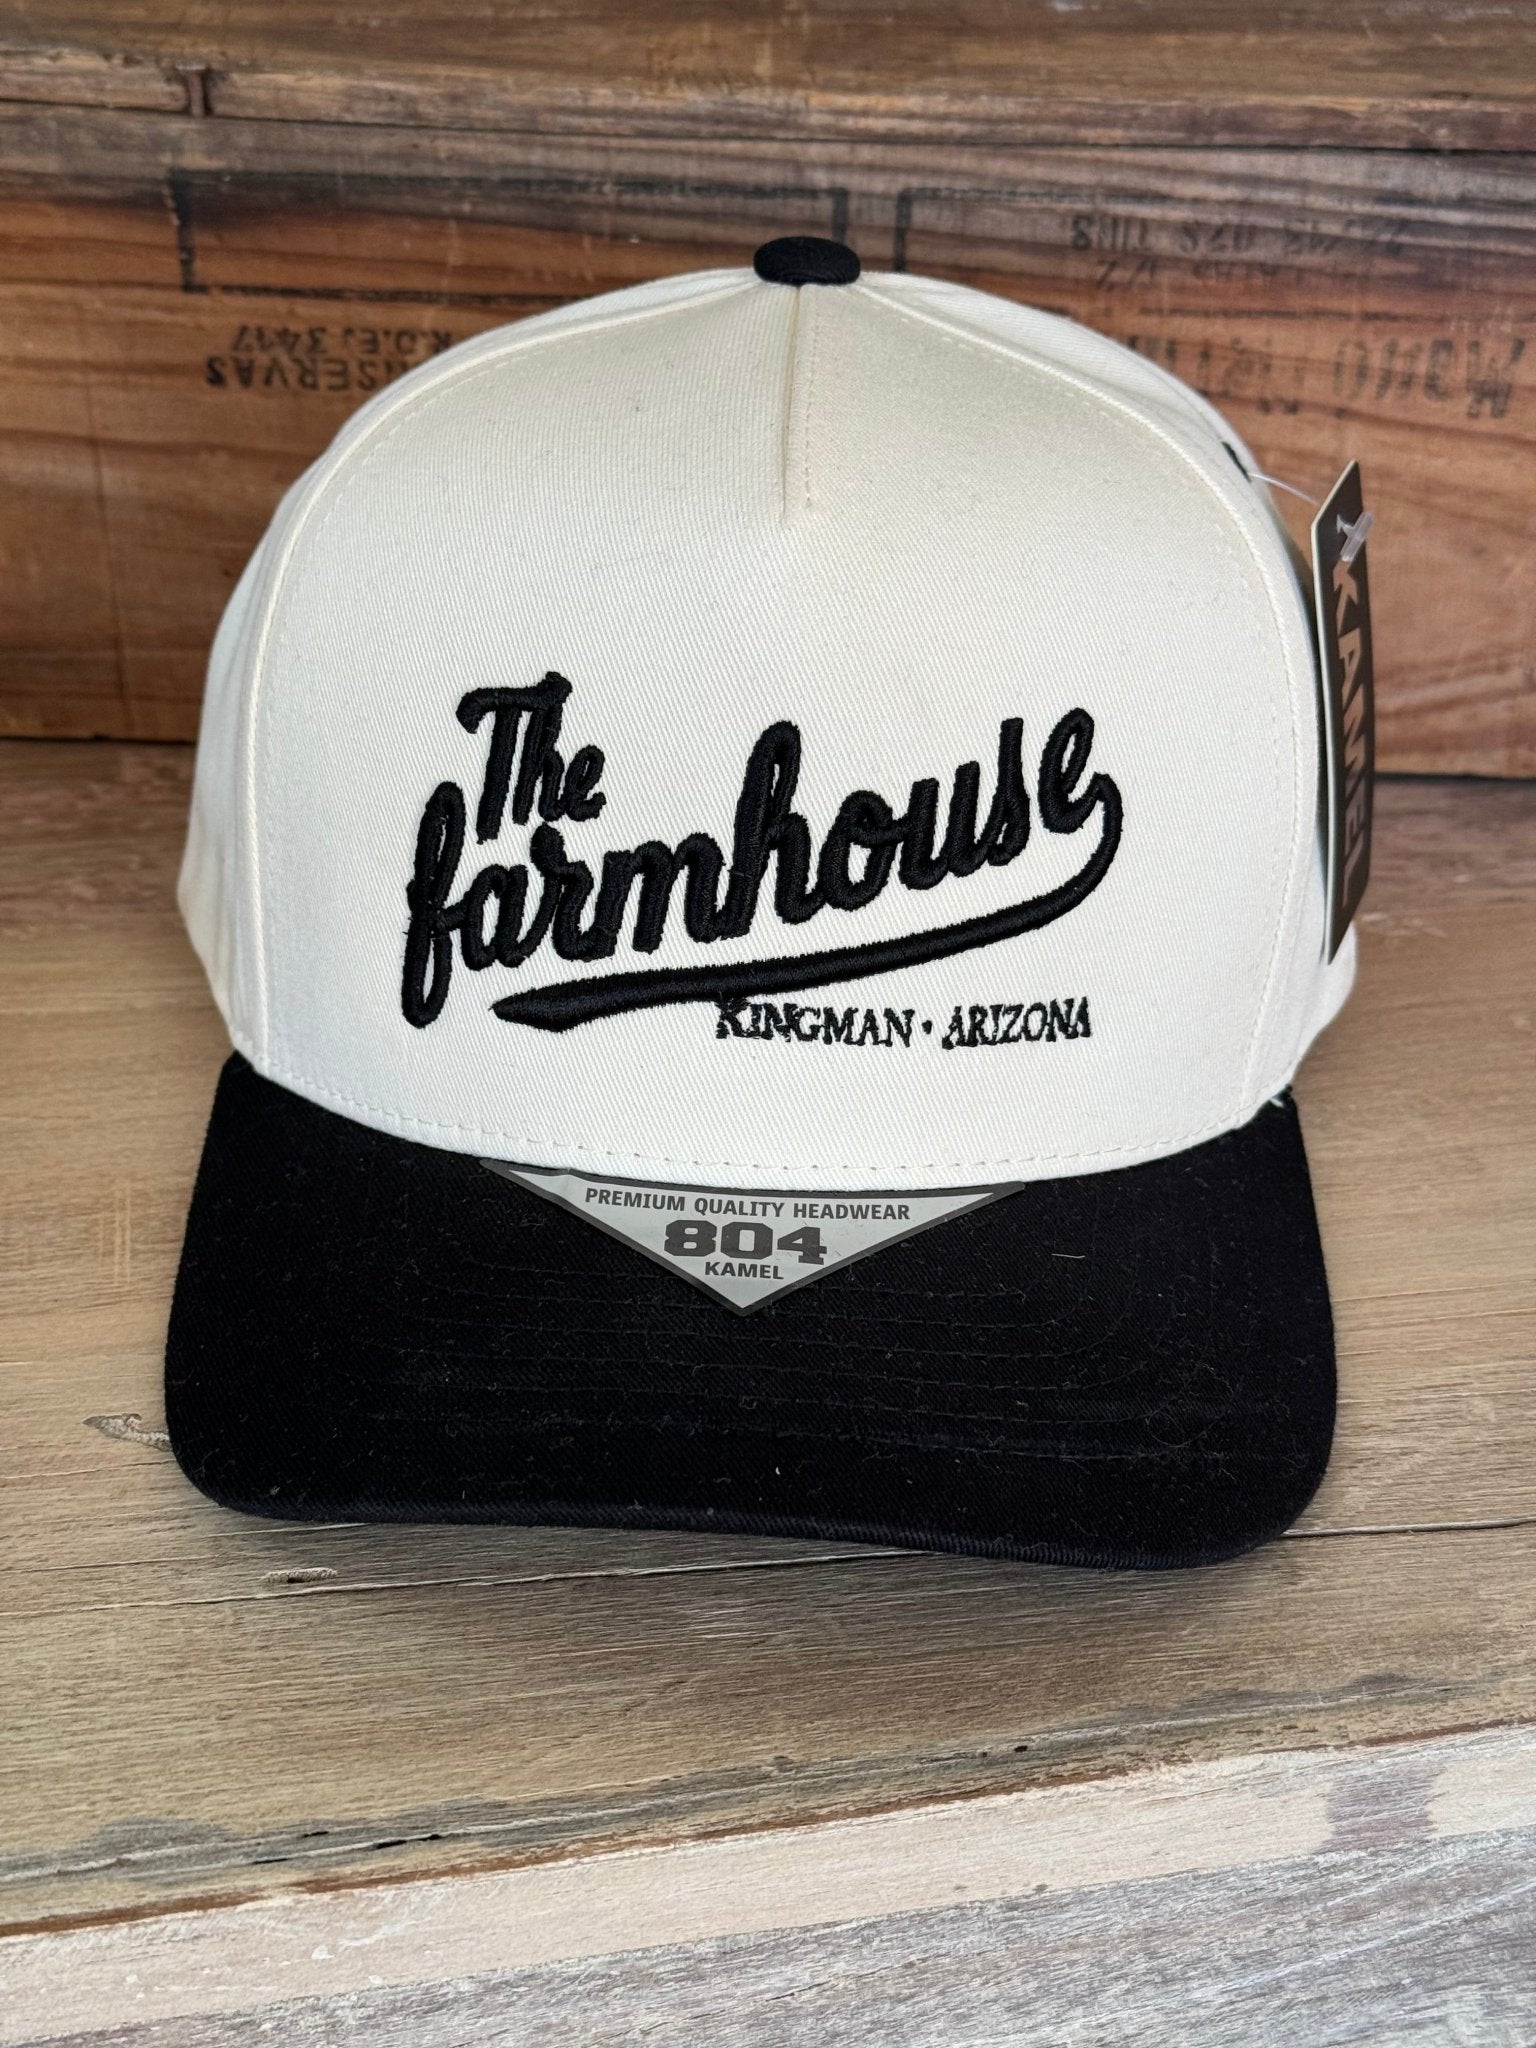 The Farmhouse Baseball Hat - The Farmhouse